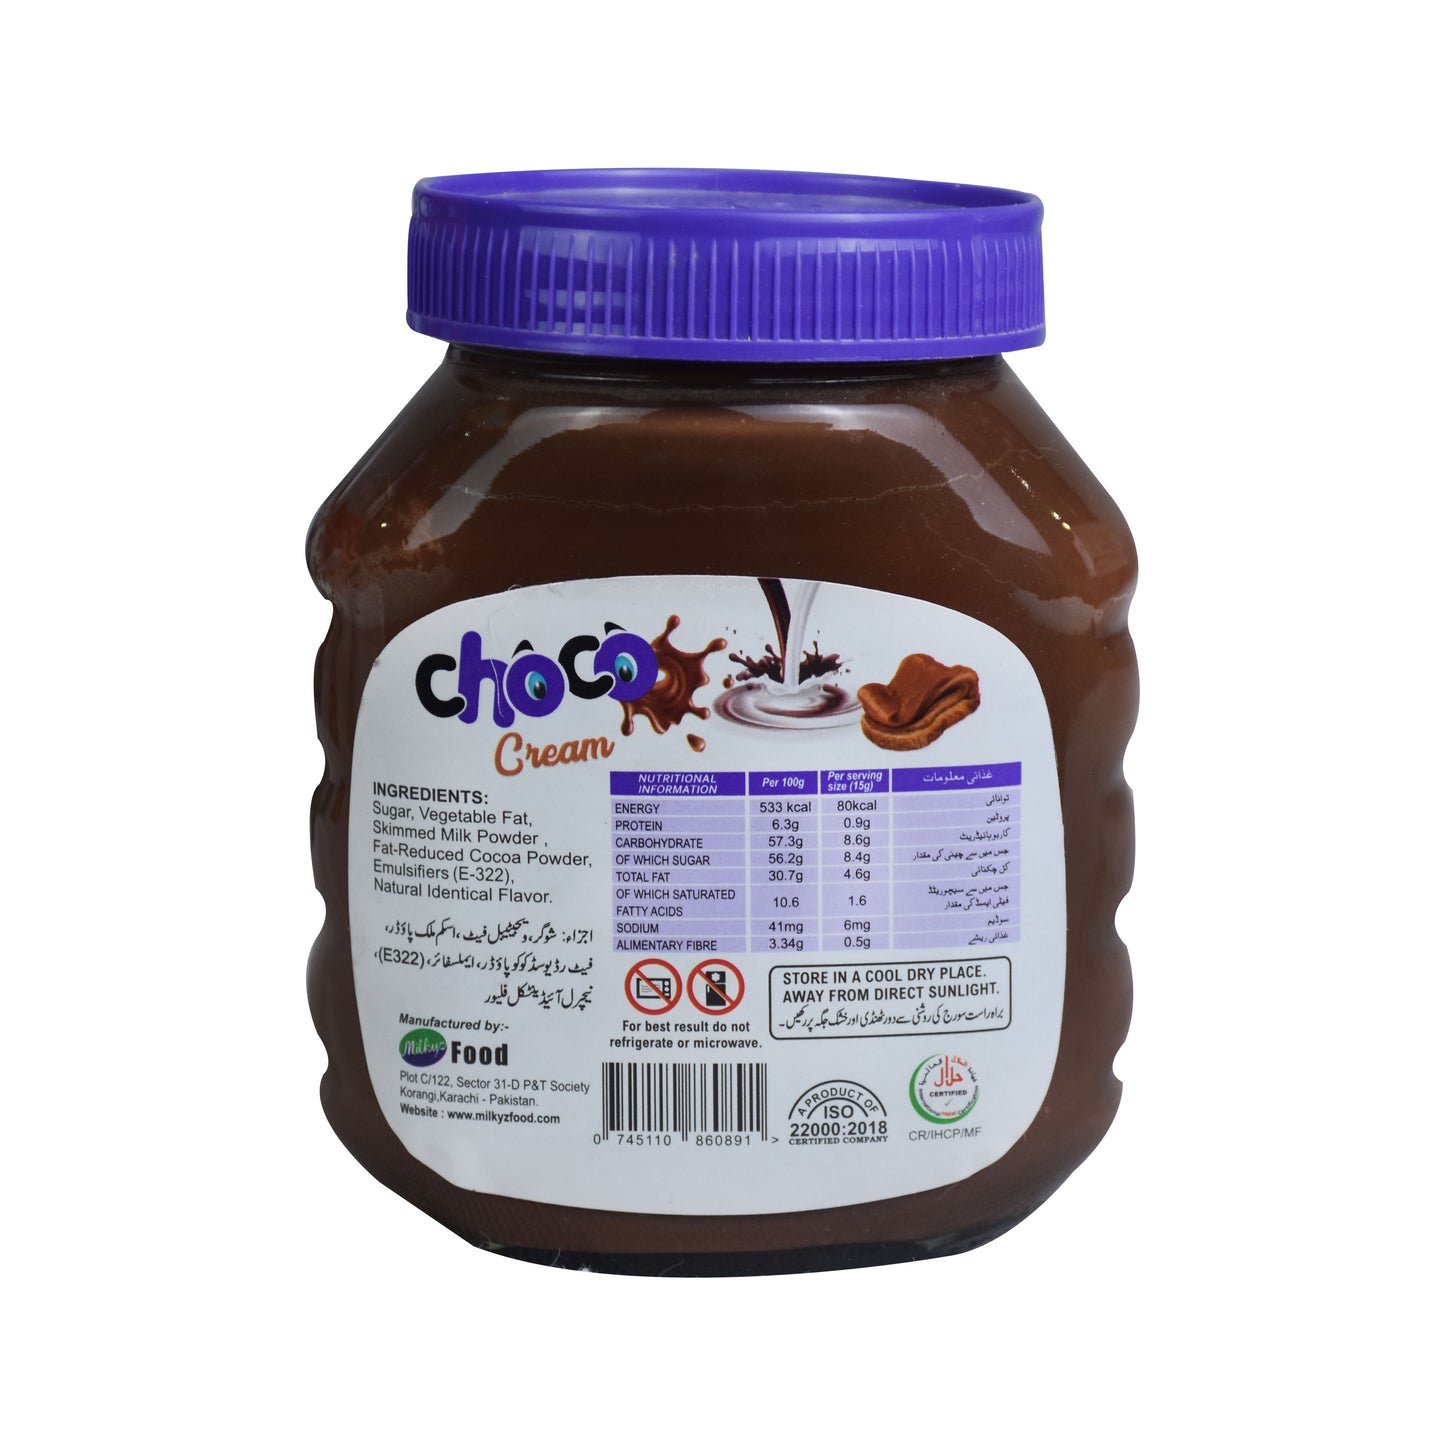 Milkyz Food Choco Cream Chocolate Milk Spread 650g Jar Bottle